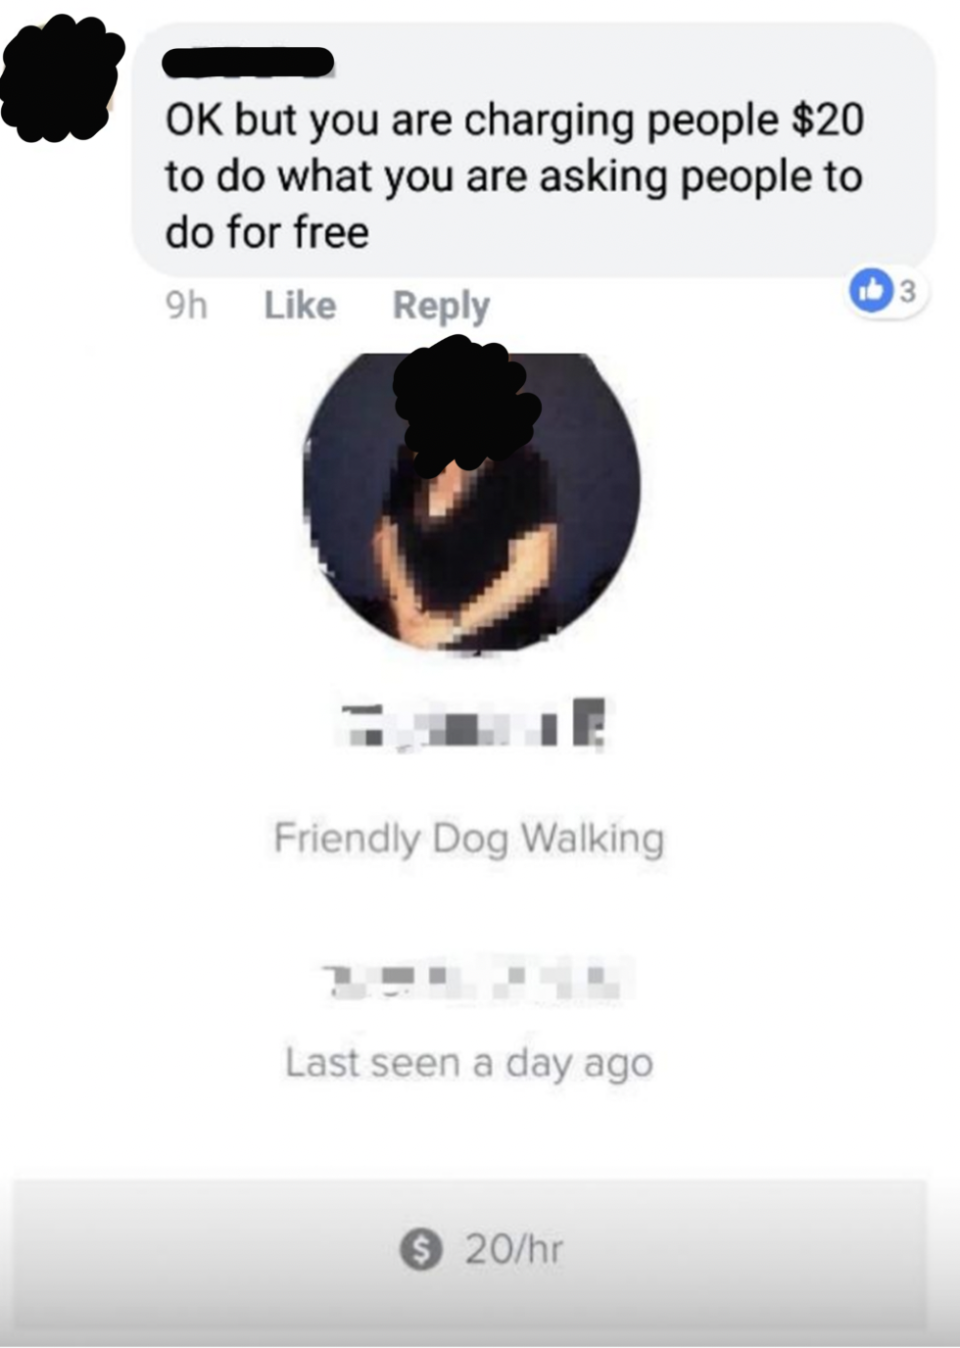 a person's dog walking profile